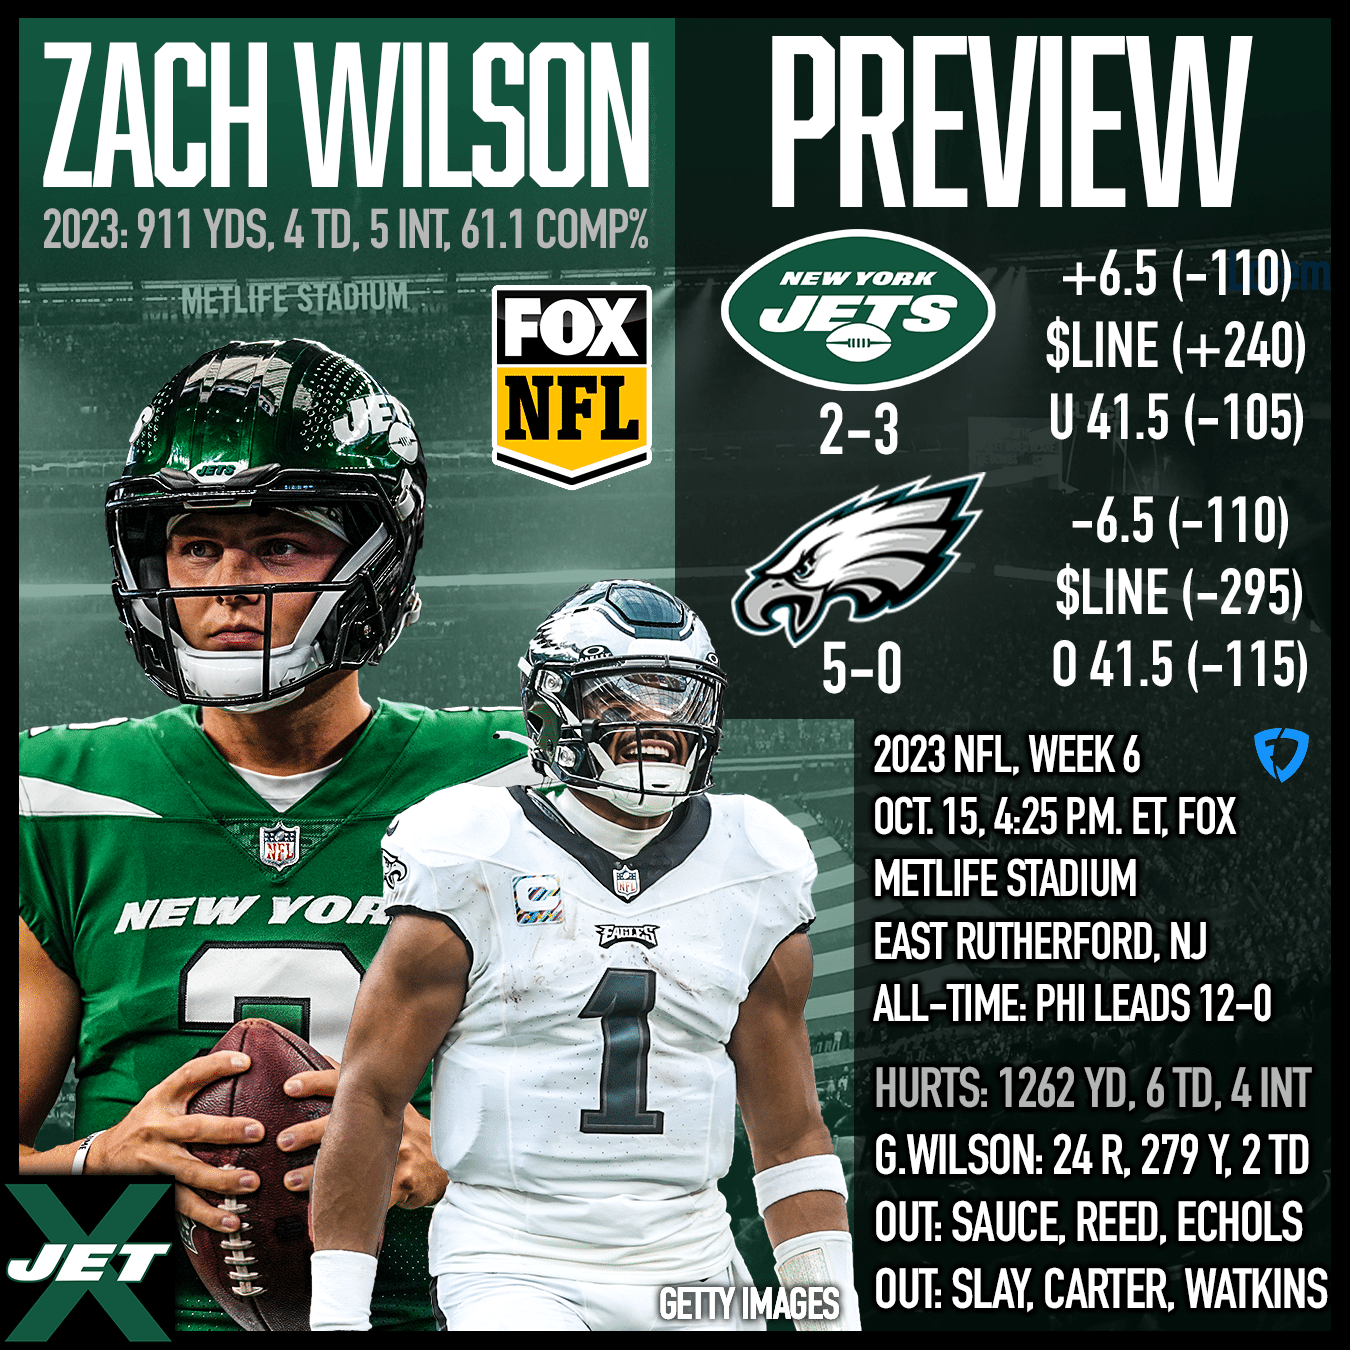 New York Jets vs. Philadelphia Eagles, 2023 NFL Week 6 Preview, Zach Wilson, Jalen Hurts